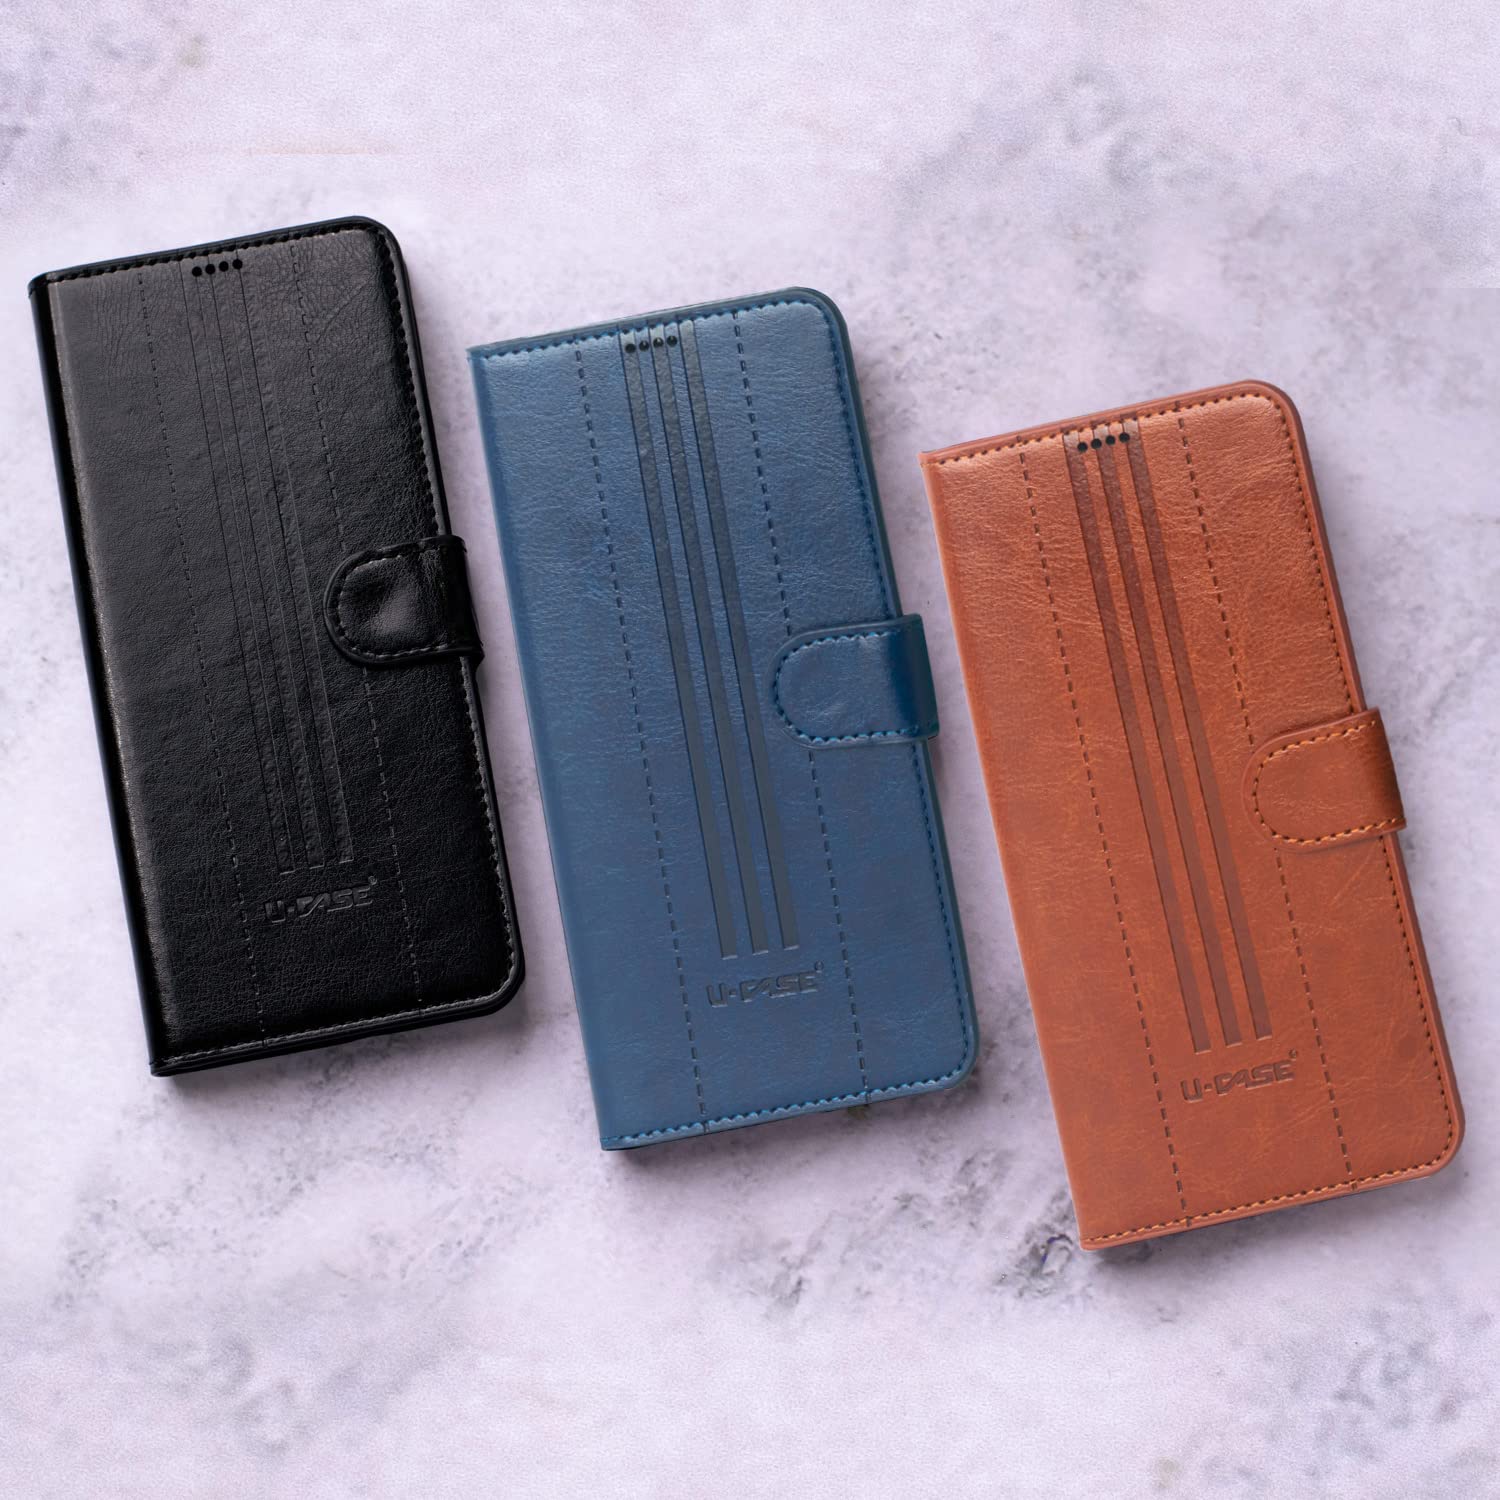 U-CASE Flip Cover for Oppo A12, Realme 2 Pro, Realme U1,Oppo F9 Pro, Oppo A5s, Oppo A7,  Oppo A11K Vegan Foldable Stand & Pocket Magnetic Closure colors